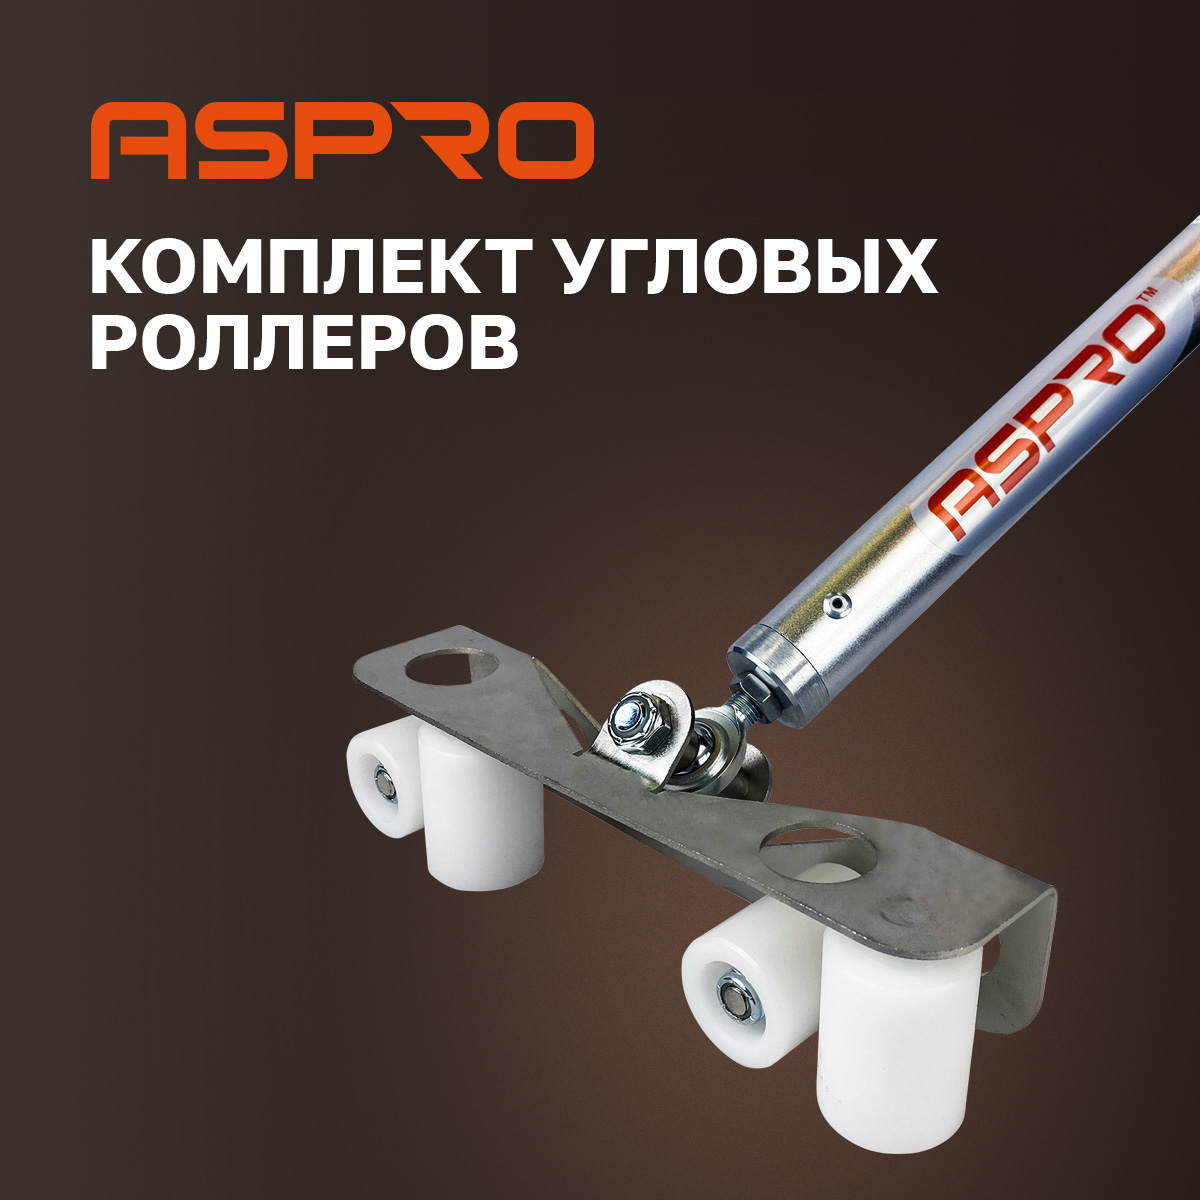 Комплект угловых роллеров Aspro, 102280 комплект угловых элементов dkc